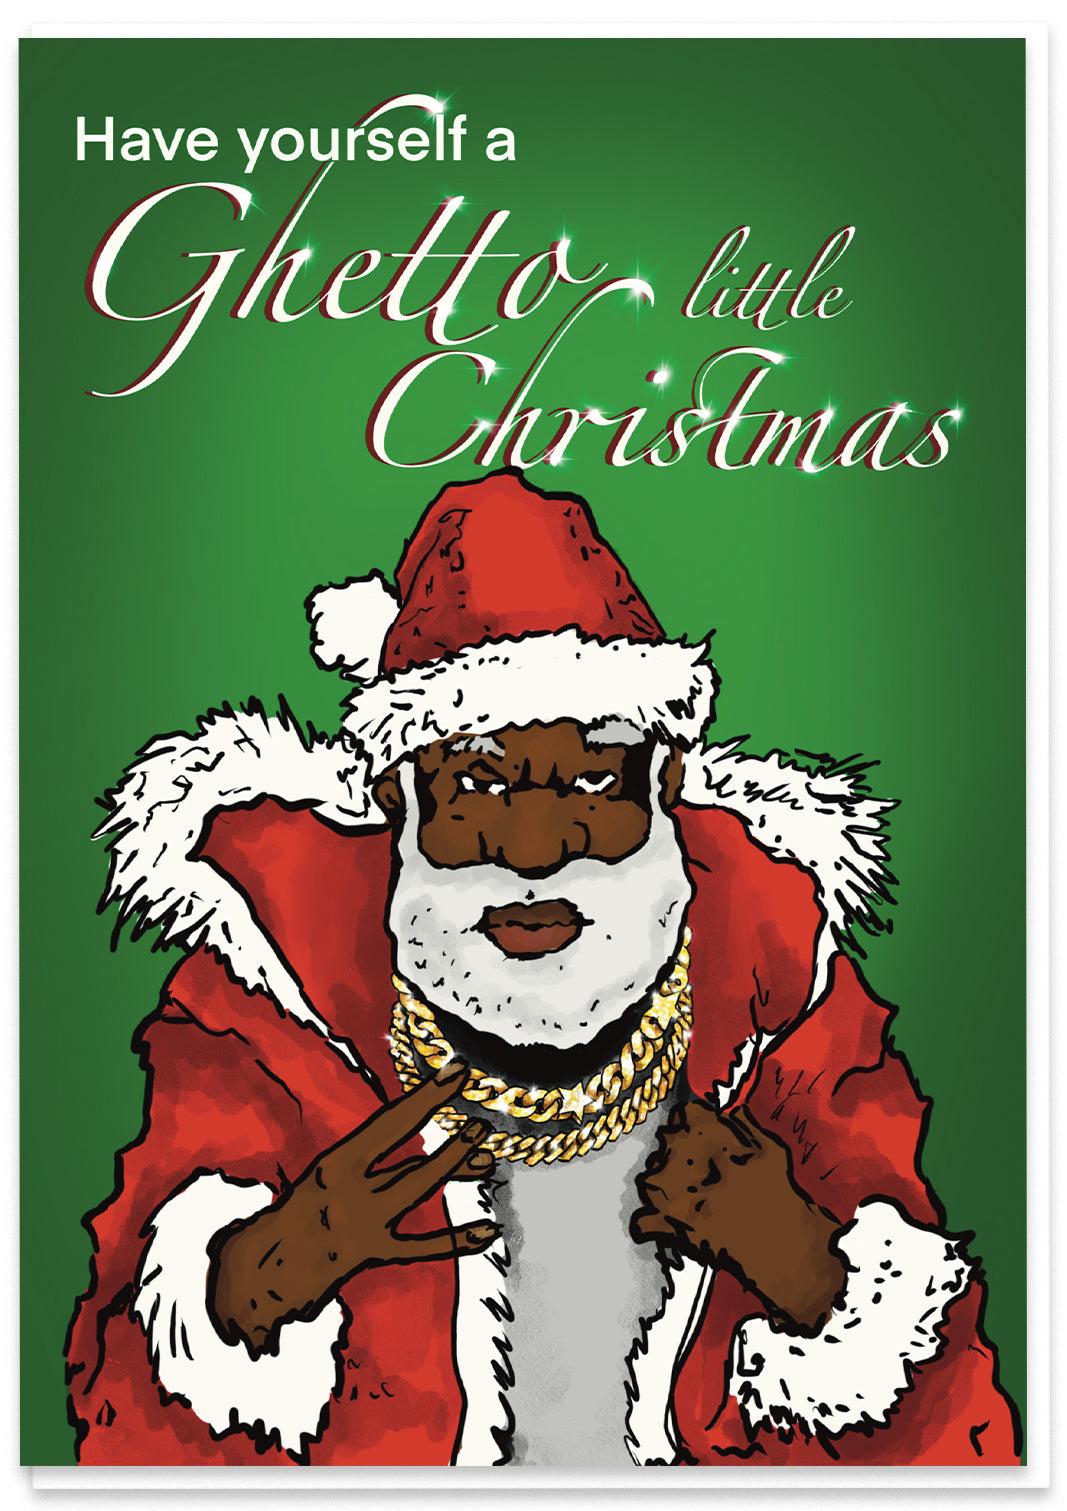 Ghetto Little Christmas